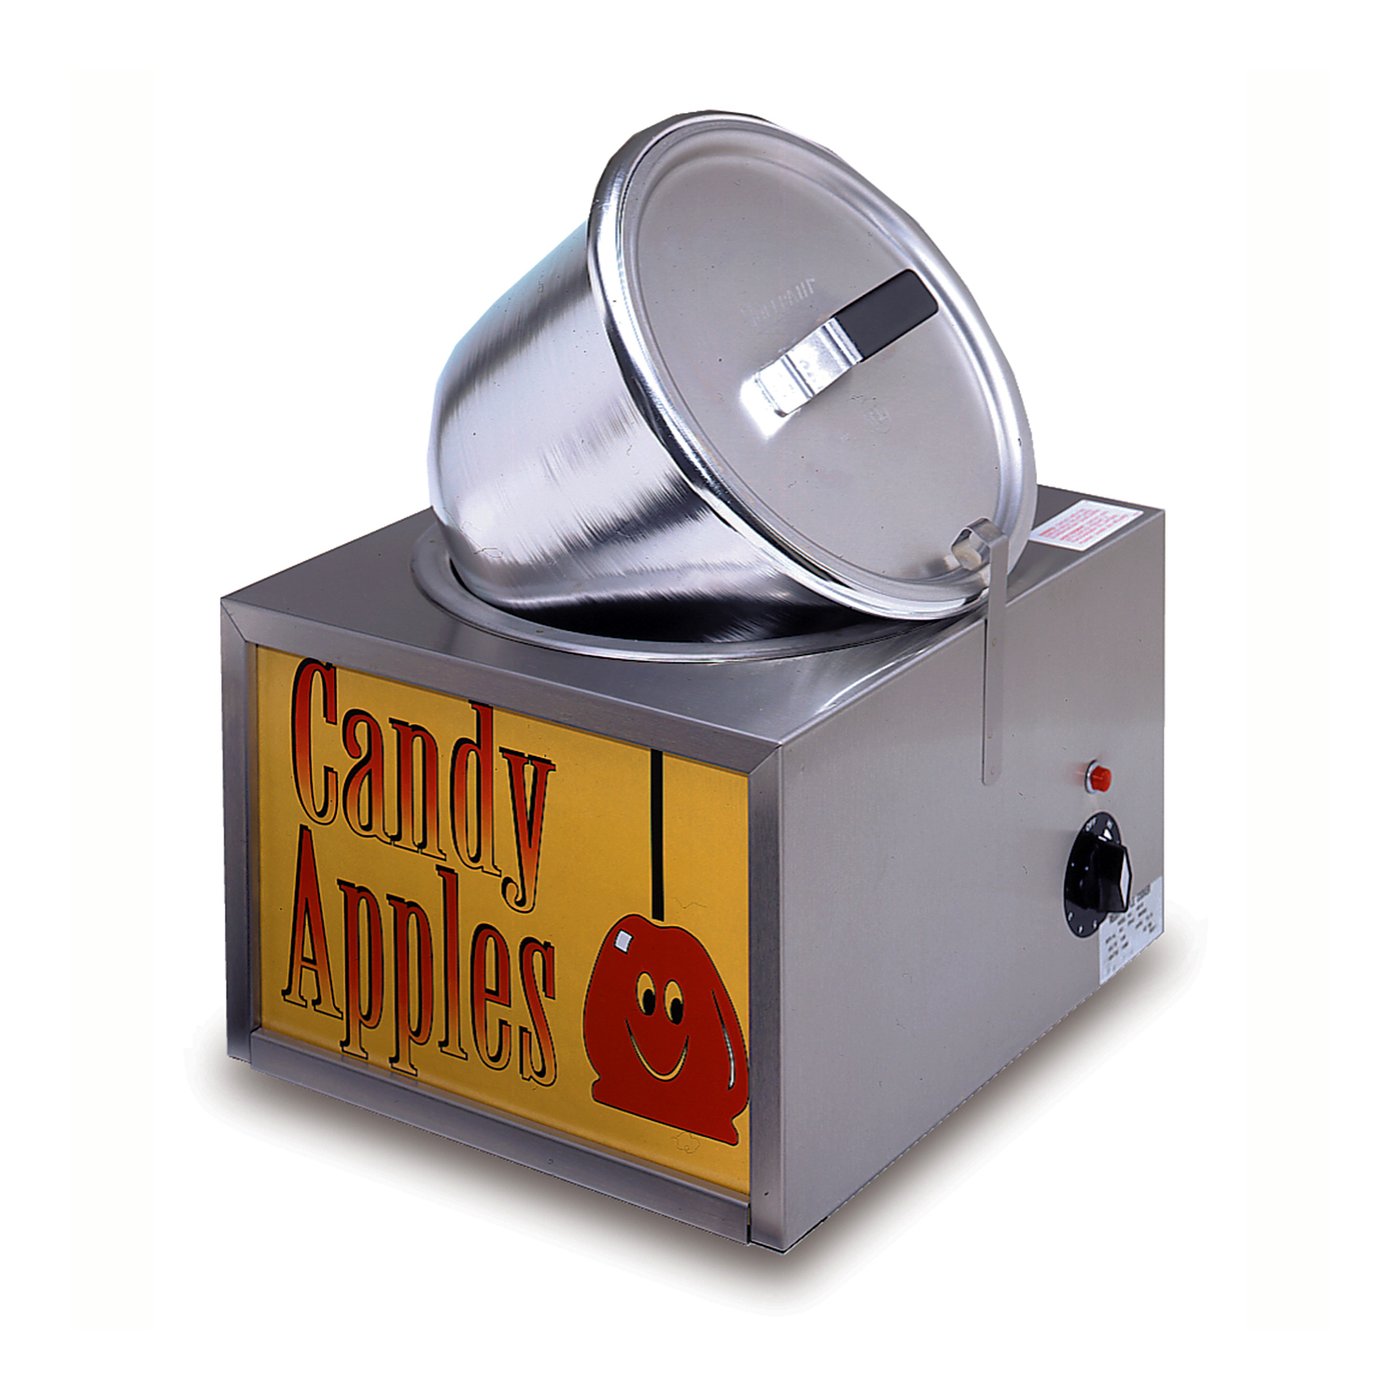 Gold Medal 4016 Double Batch Candy Apple Cooker w/ Insert Pot, 120v